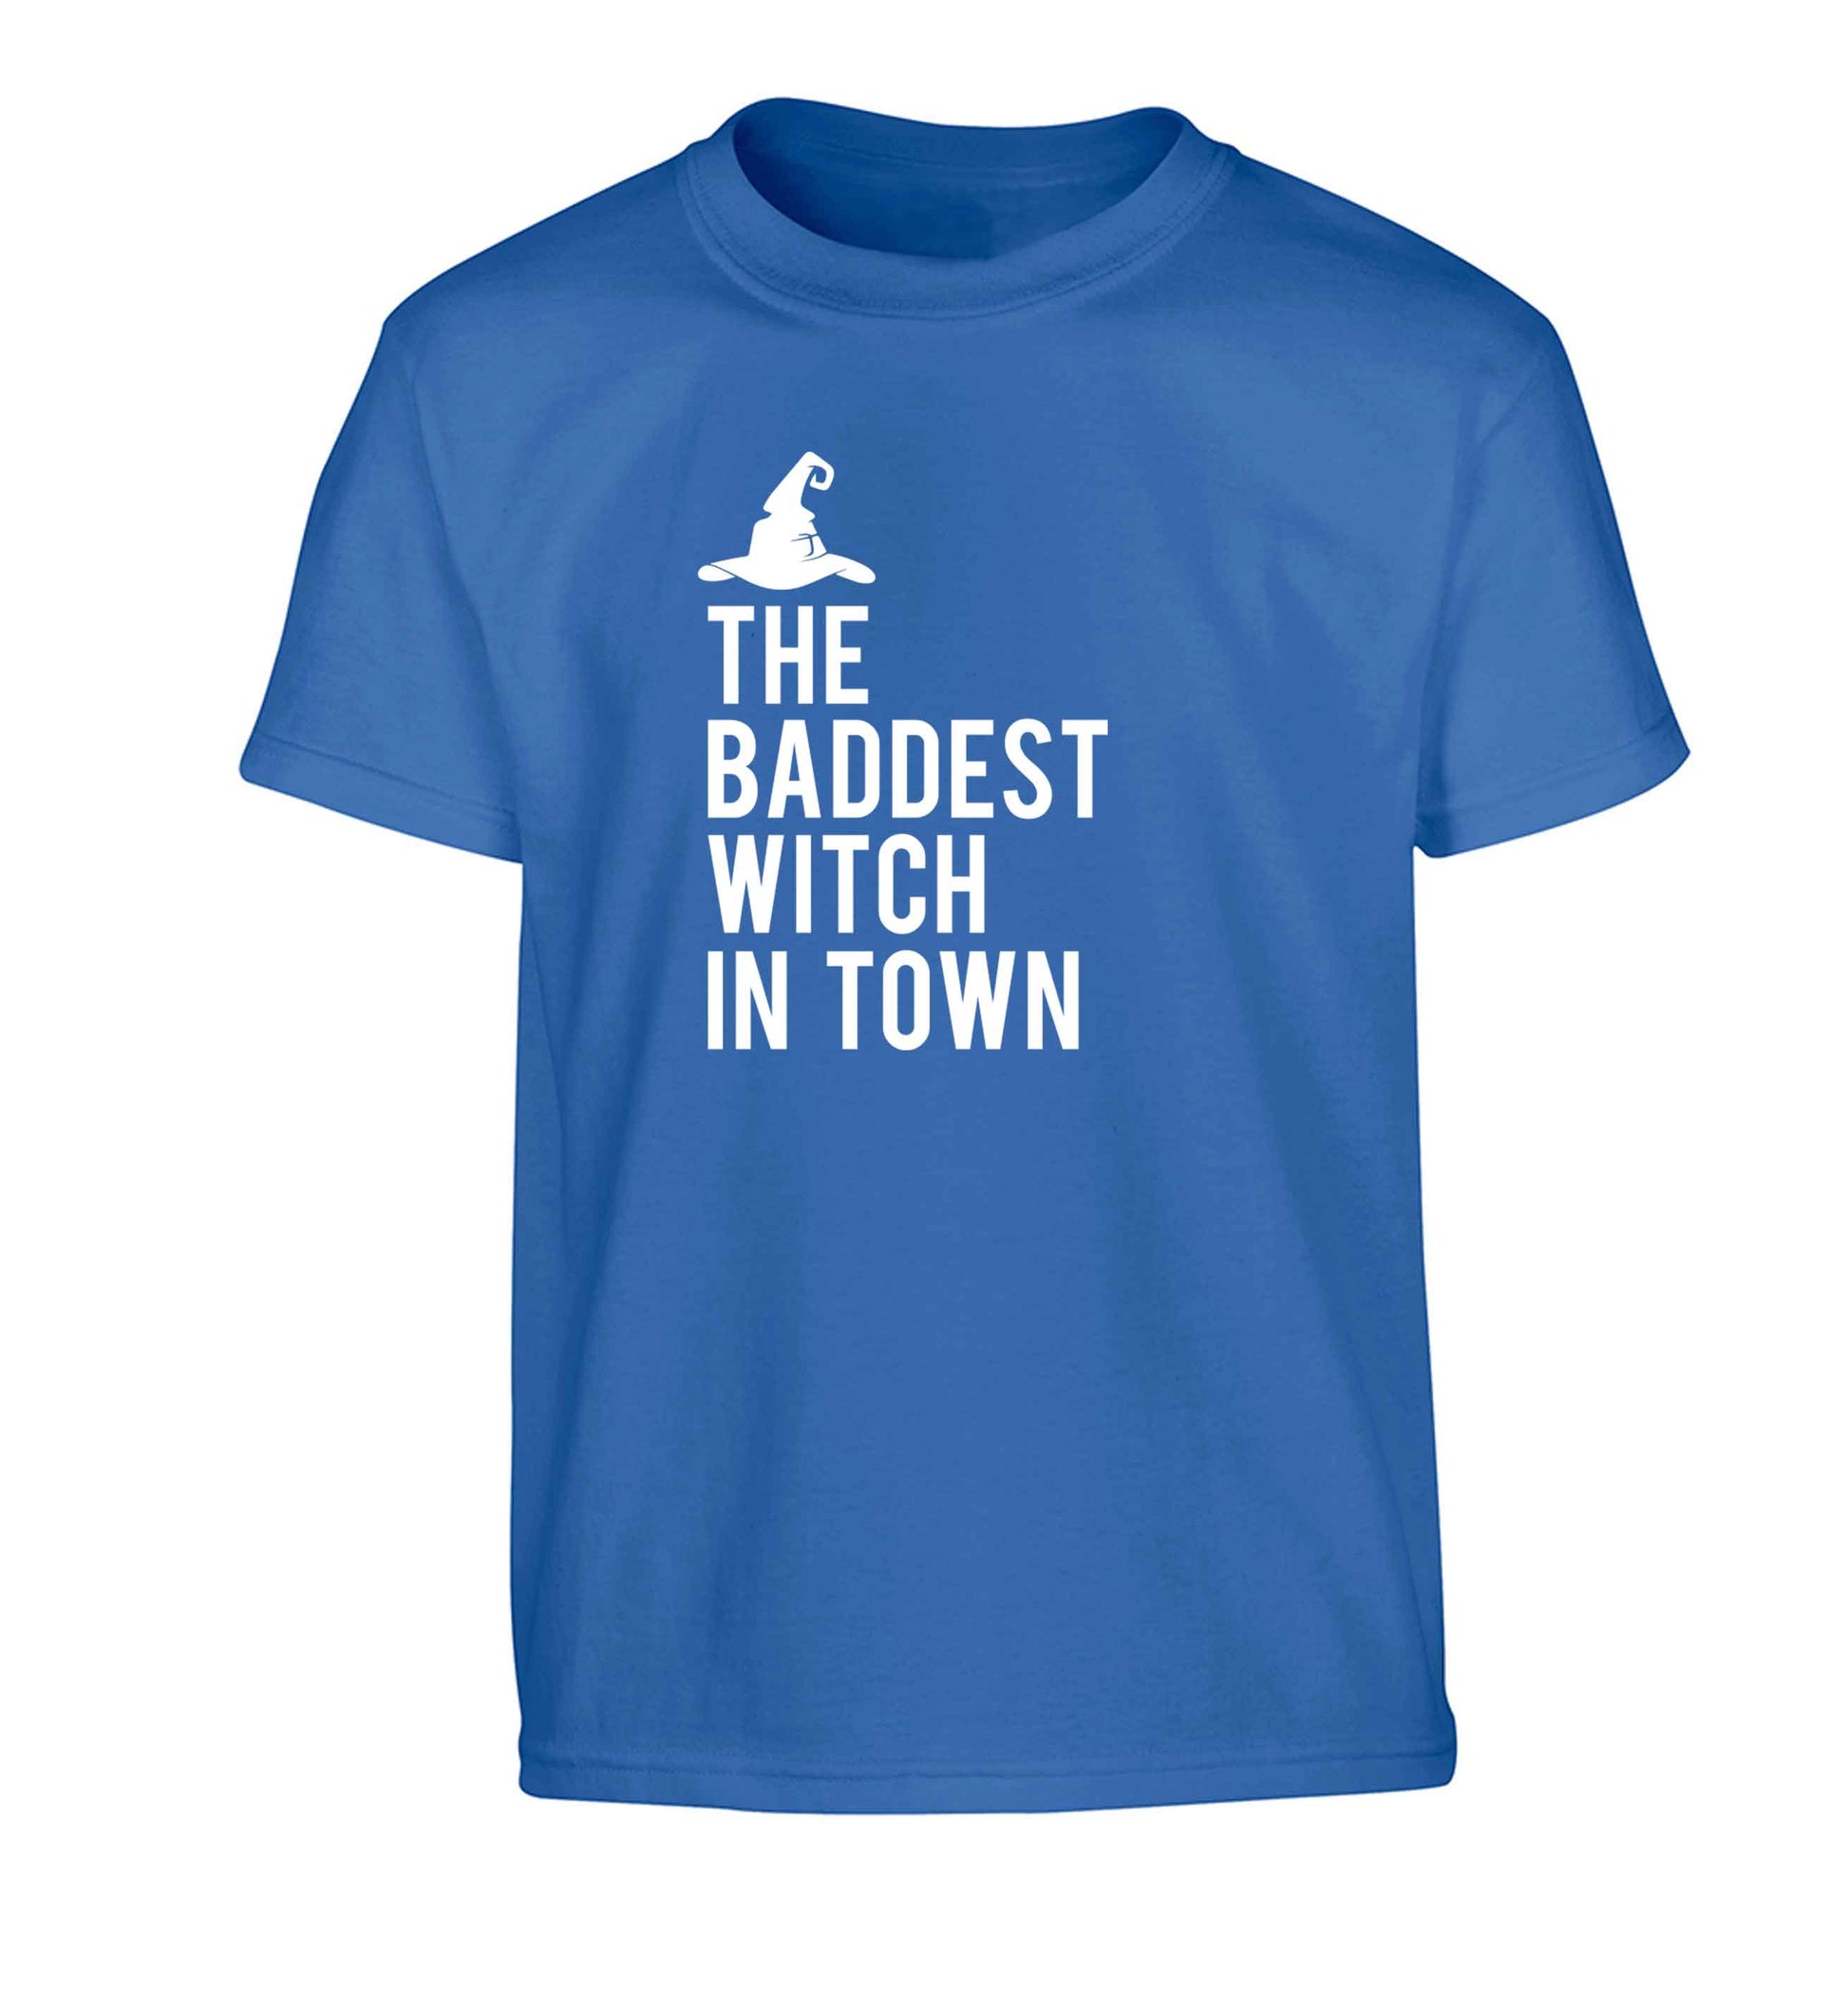 Badest witch in town Children's blue Tshirt 12-13 Years